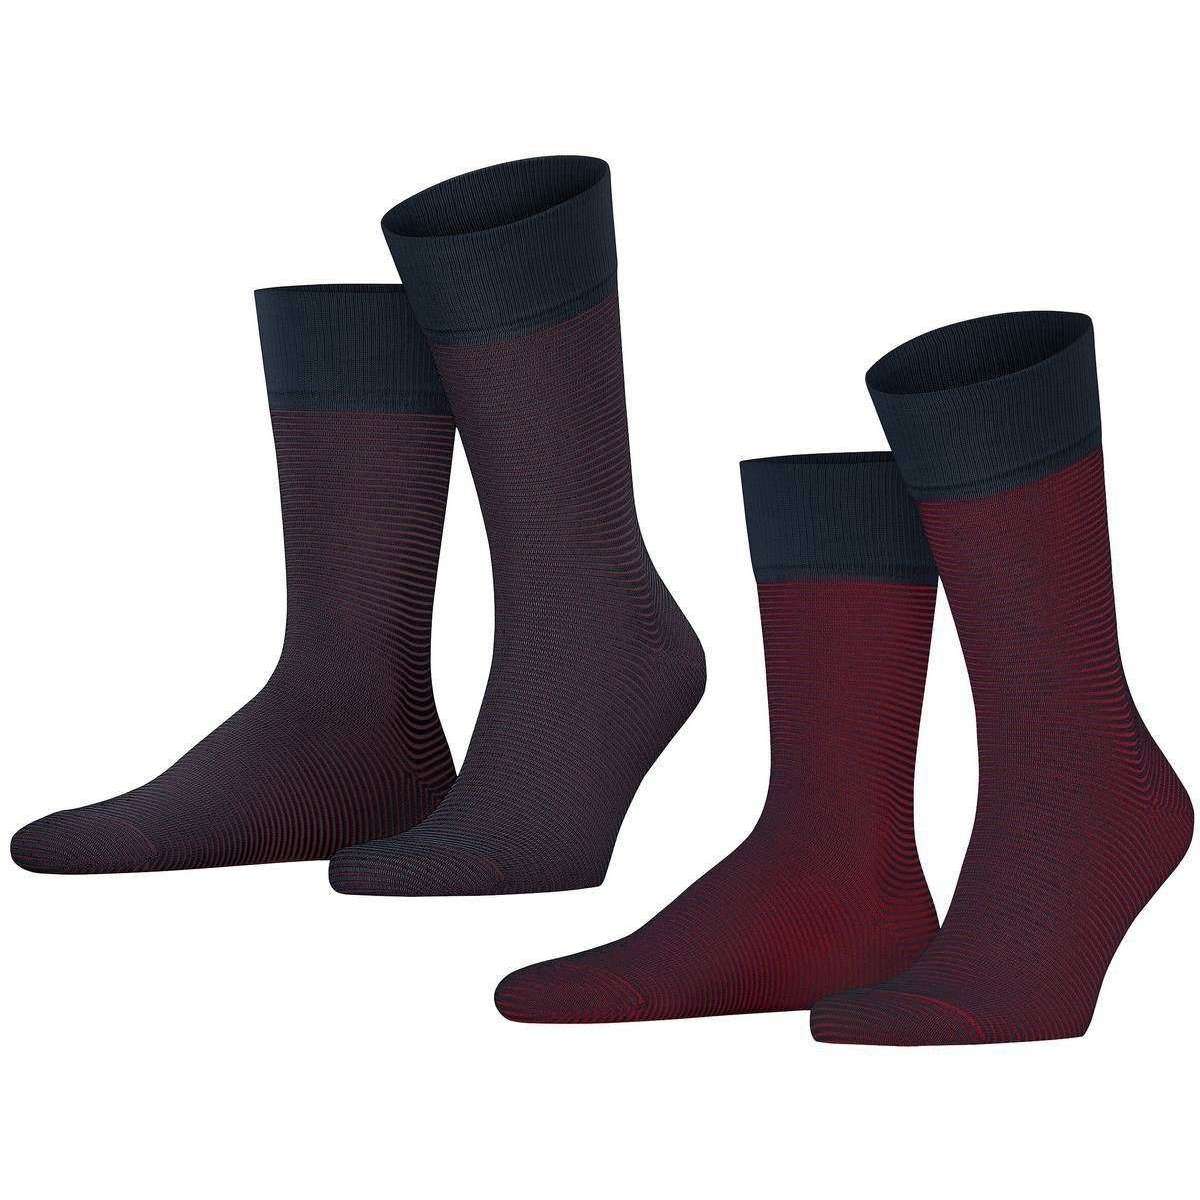 Esprit All Over Stripe 2 Pack Socks - Navy/Red